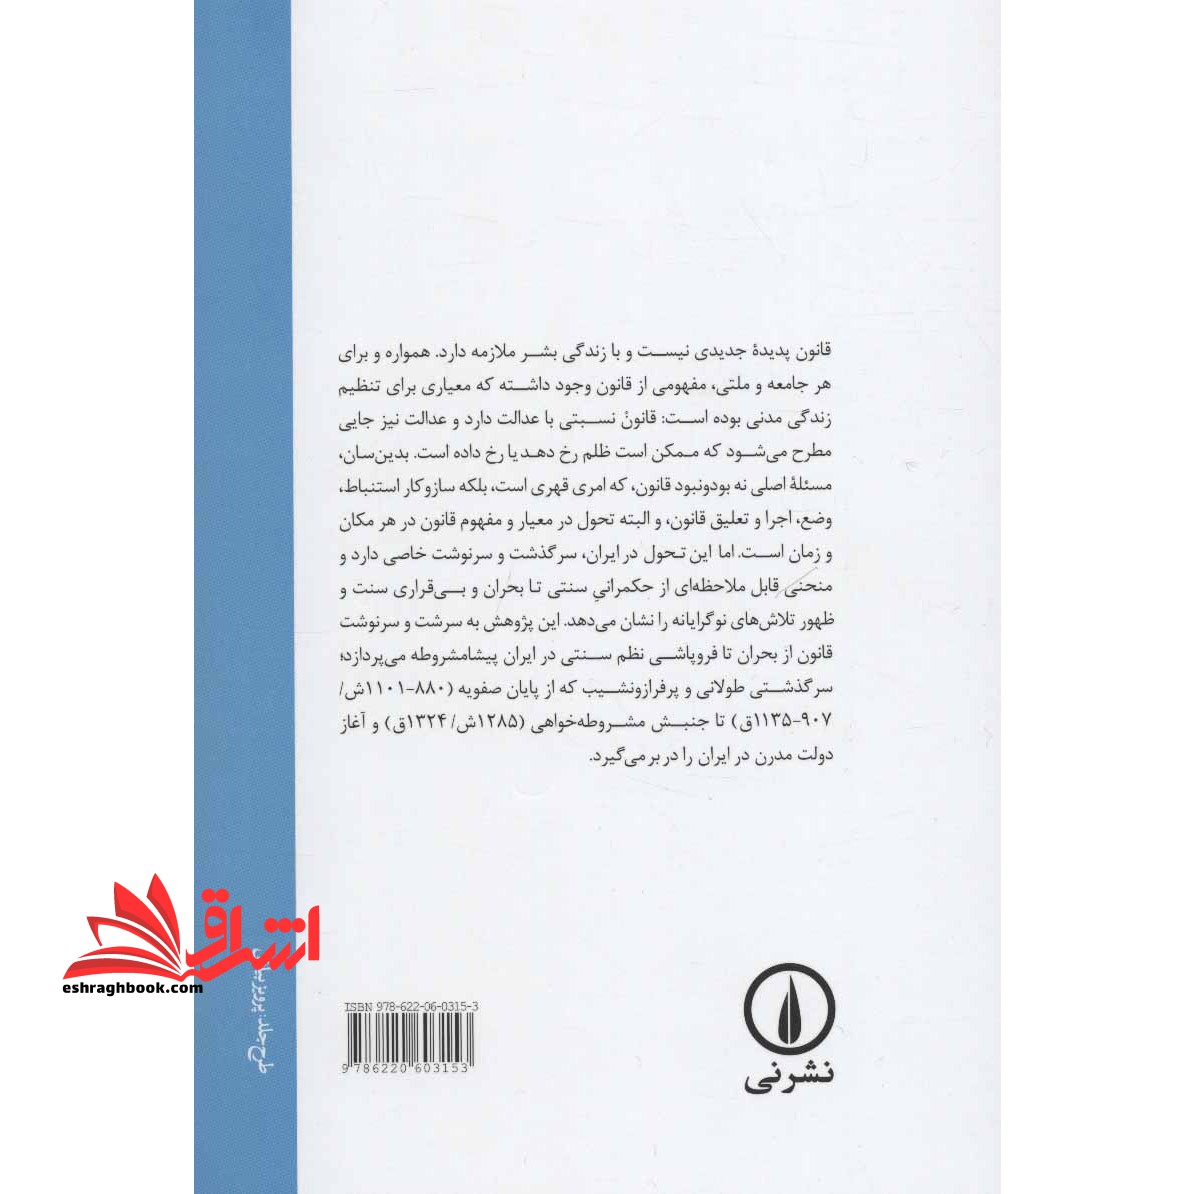 کتاب مفهوم قانون در ایران معاصر - (تحولات پیشامشروطه)